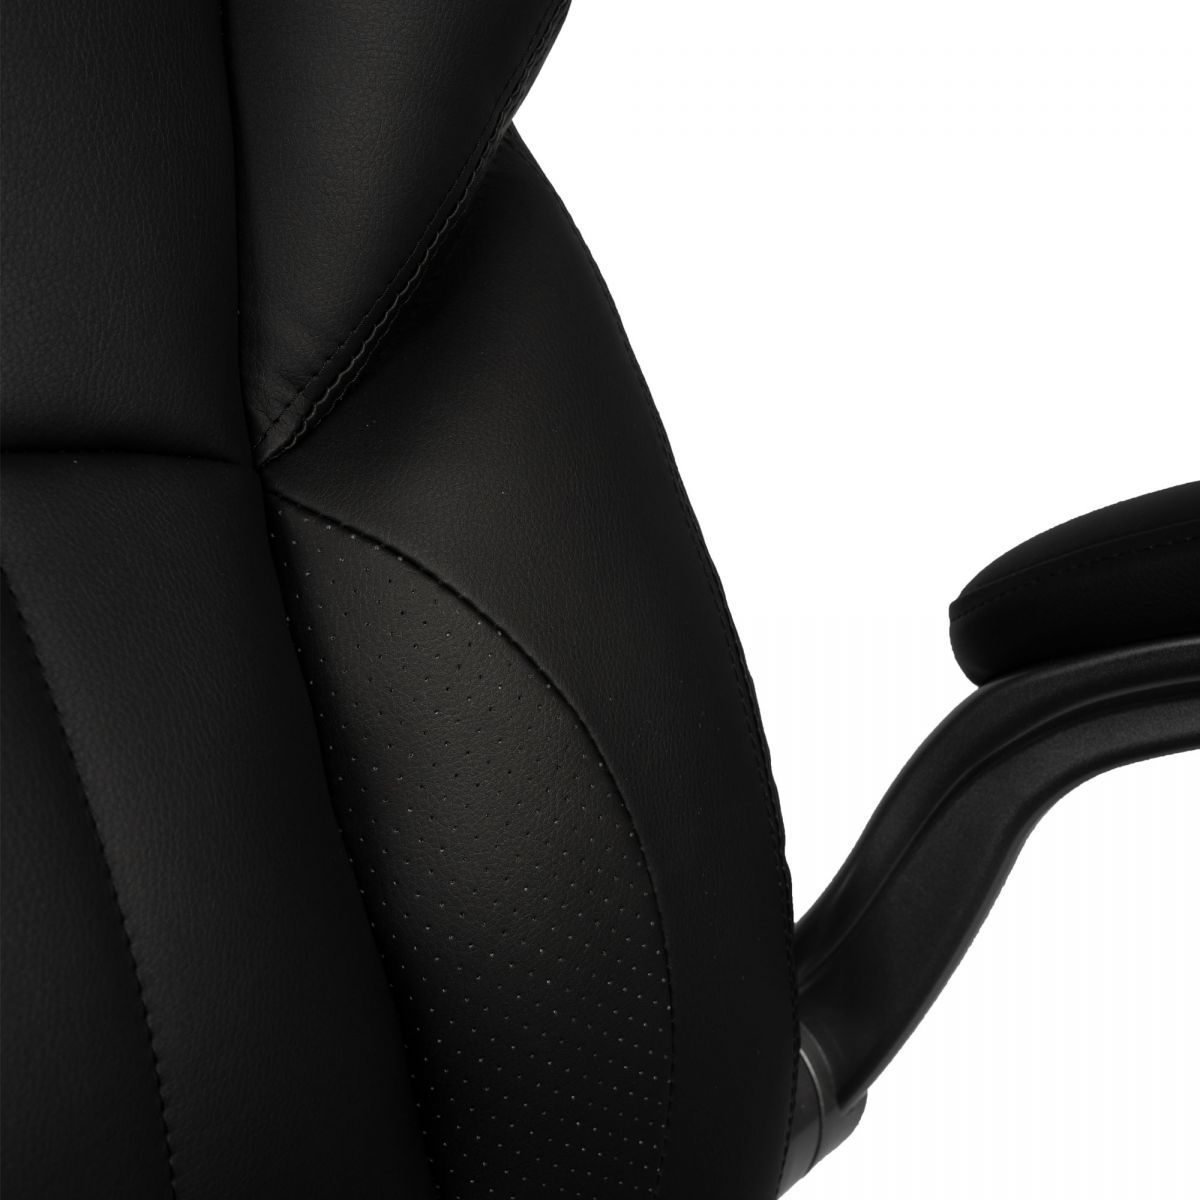 Ergodu Luxury Office Chair with Adjustable Headrest back view